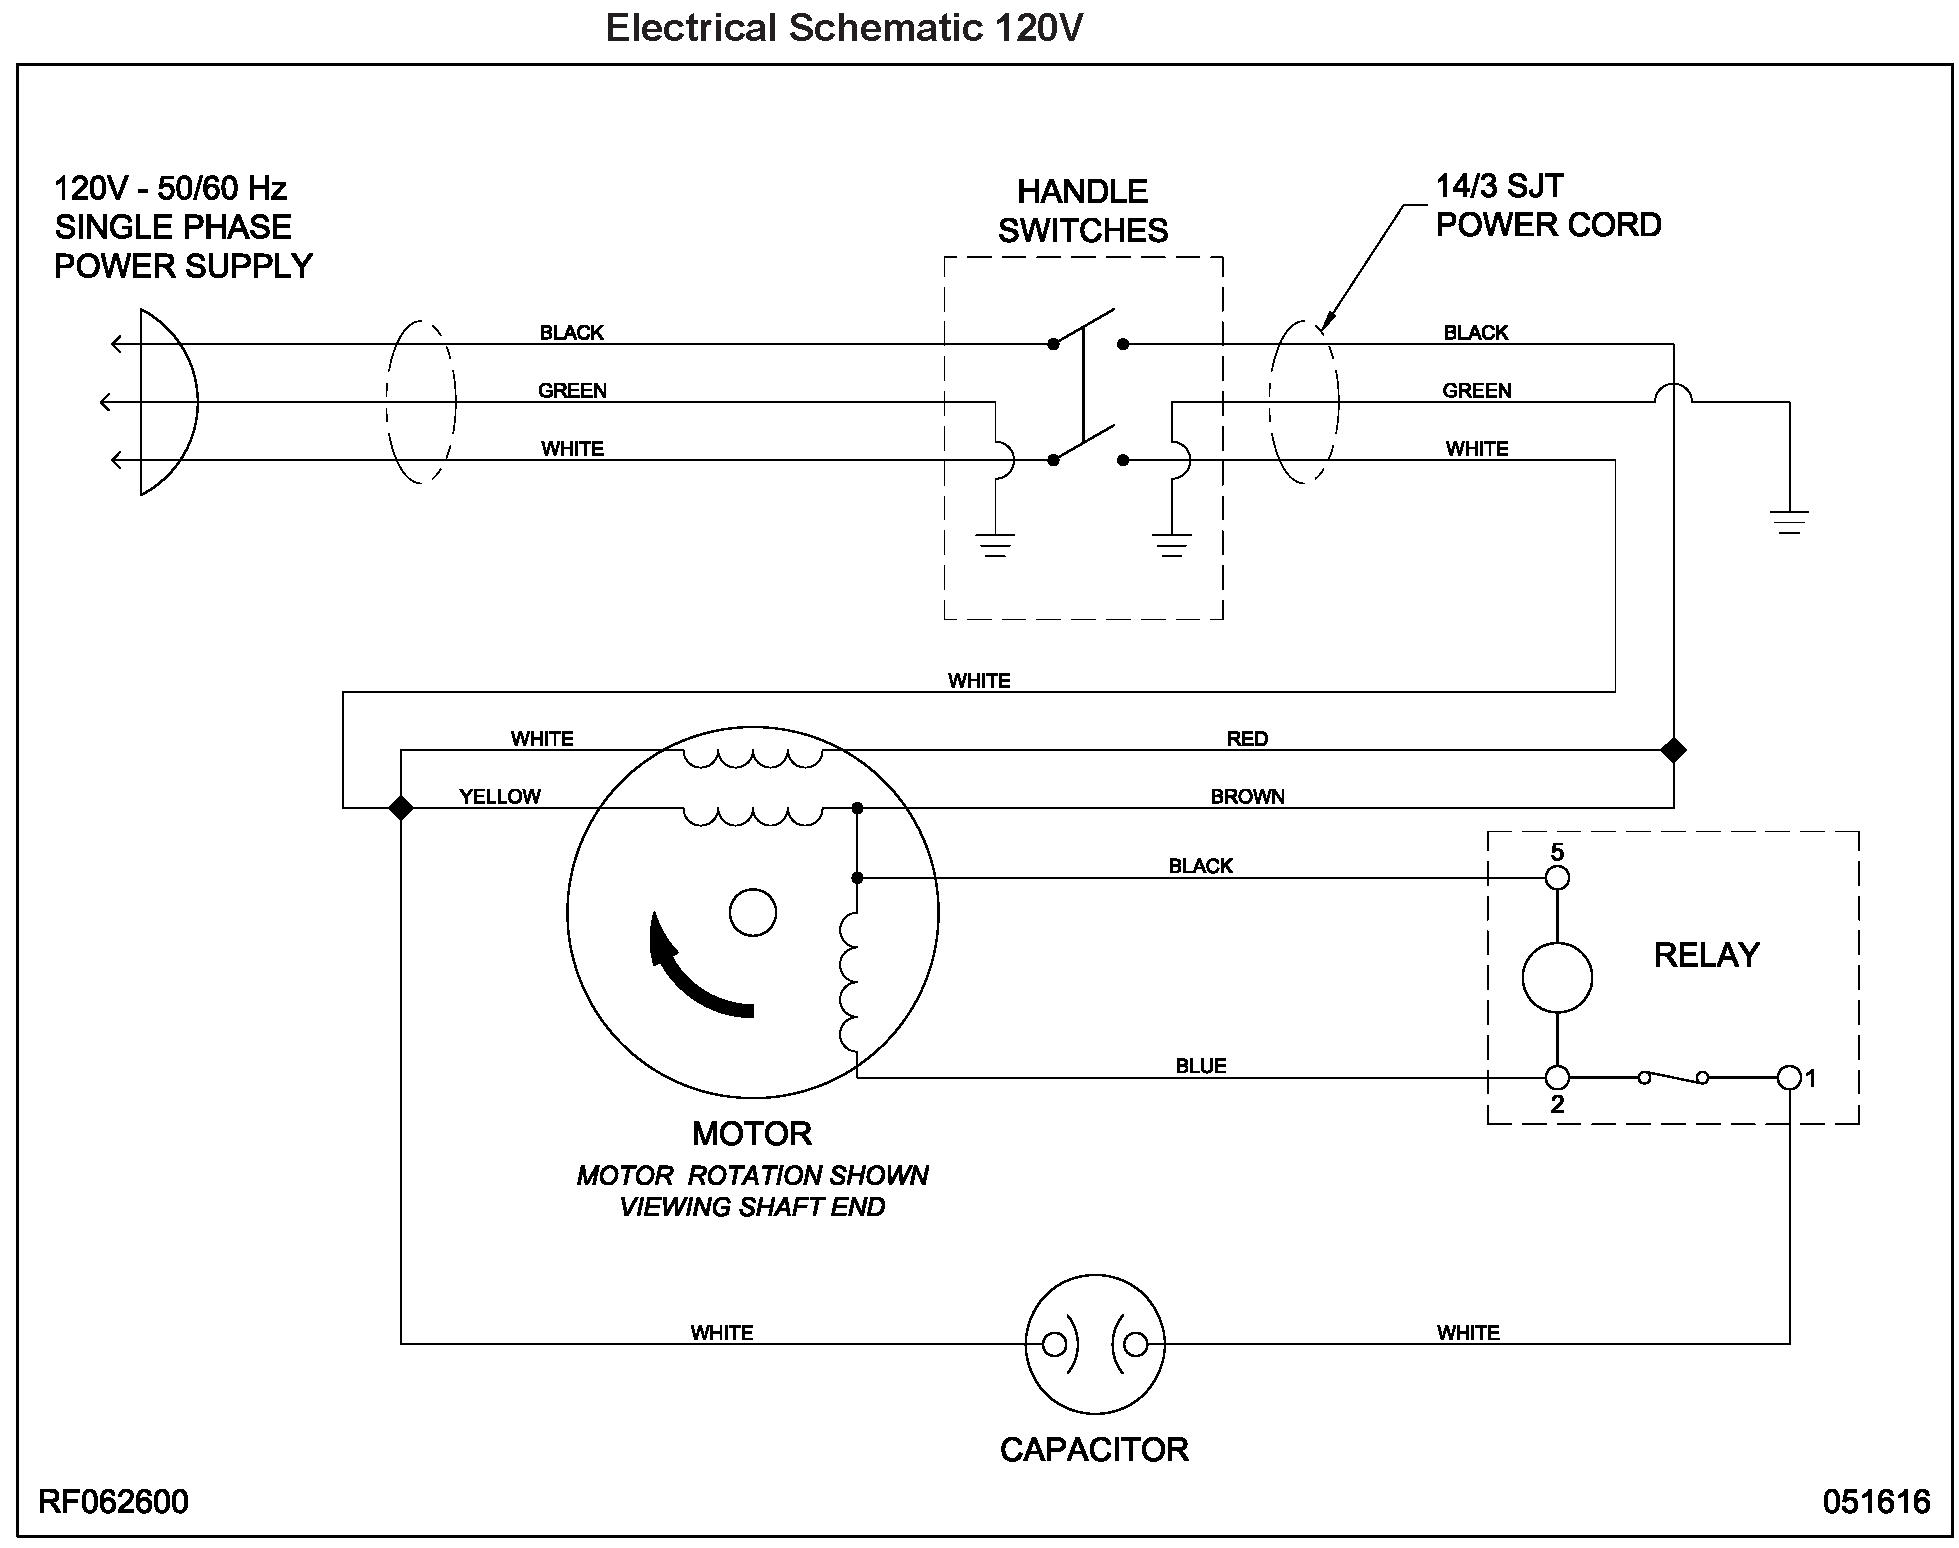 FM 120V Electrical Schematic